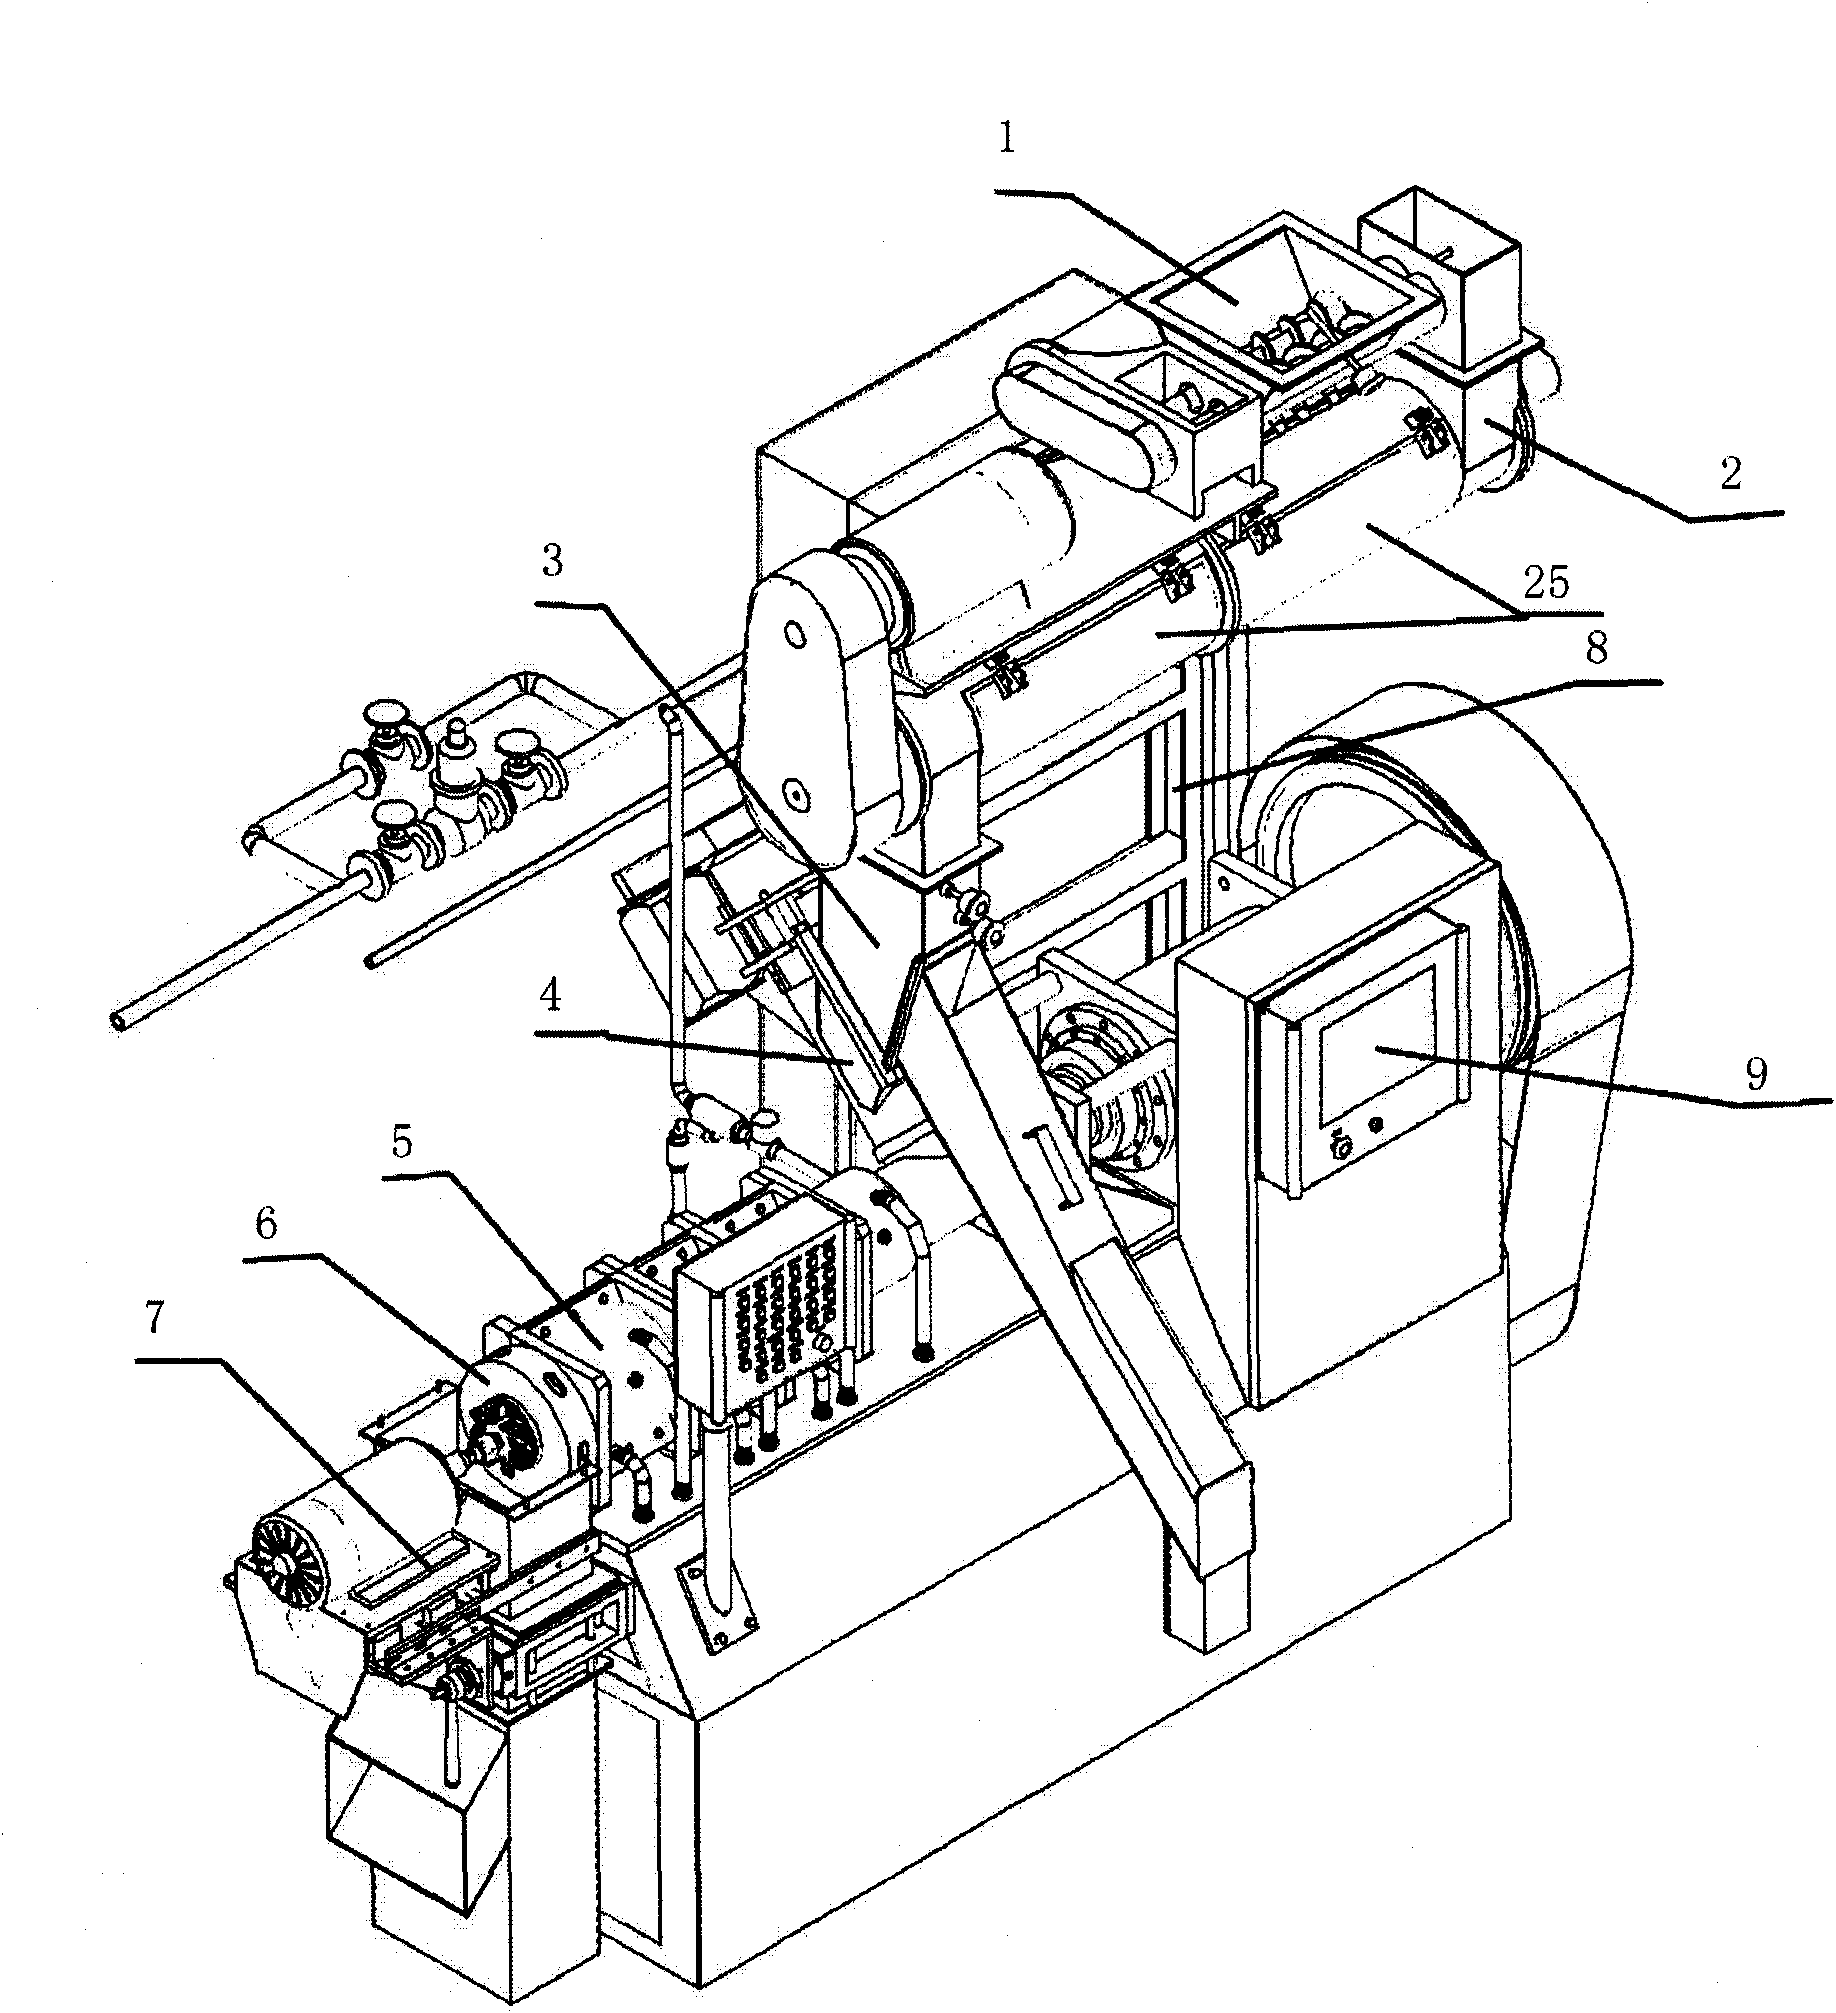 Single-screw low-temperature wet-process puffing machine